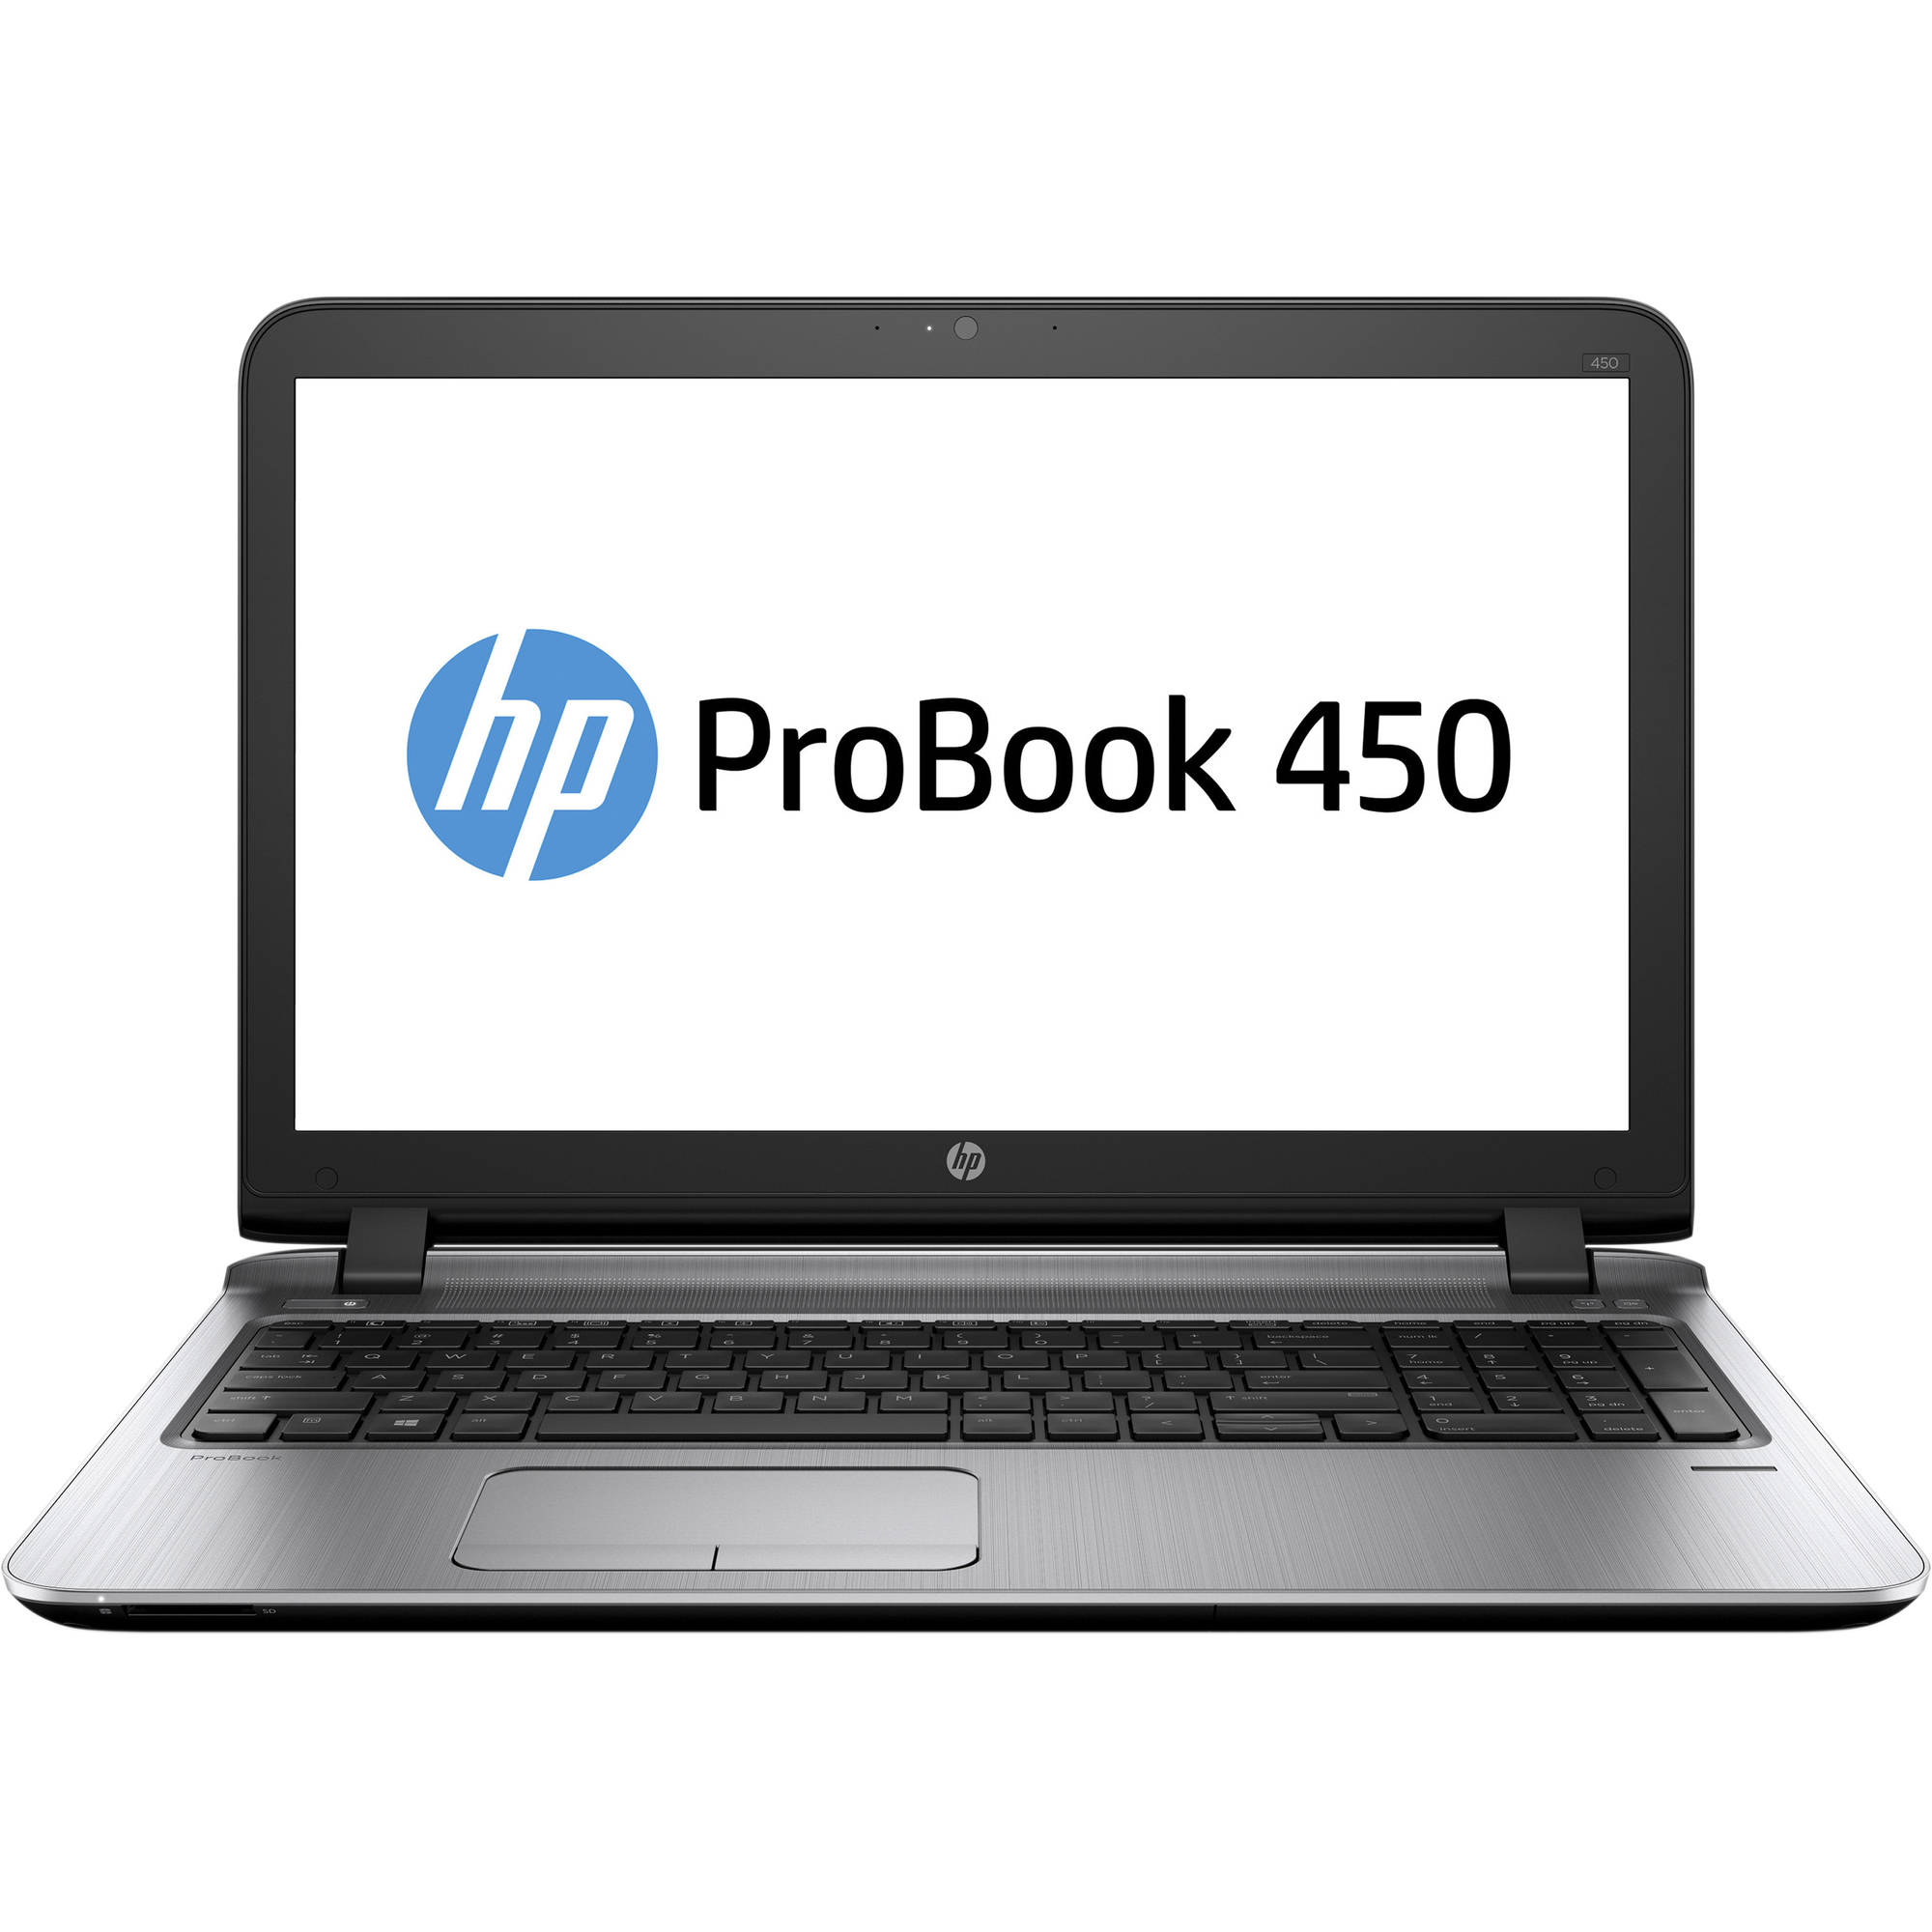 Laptop HP ProBook 450 G3, Intel Core i7-6500U, 8GB DDR3, HDD 1TB, AMD Radeon R7 M340 2GB, Free DOS